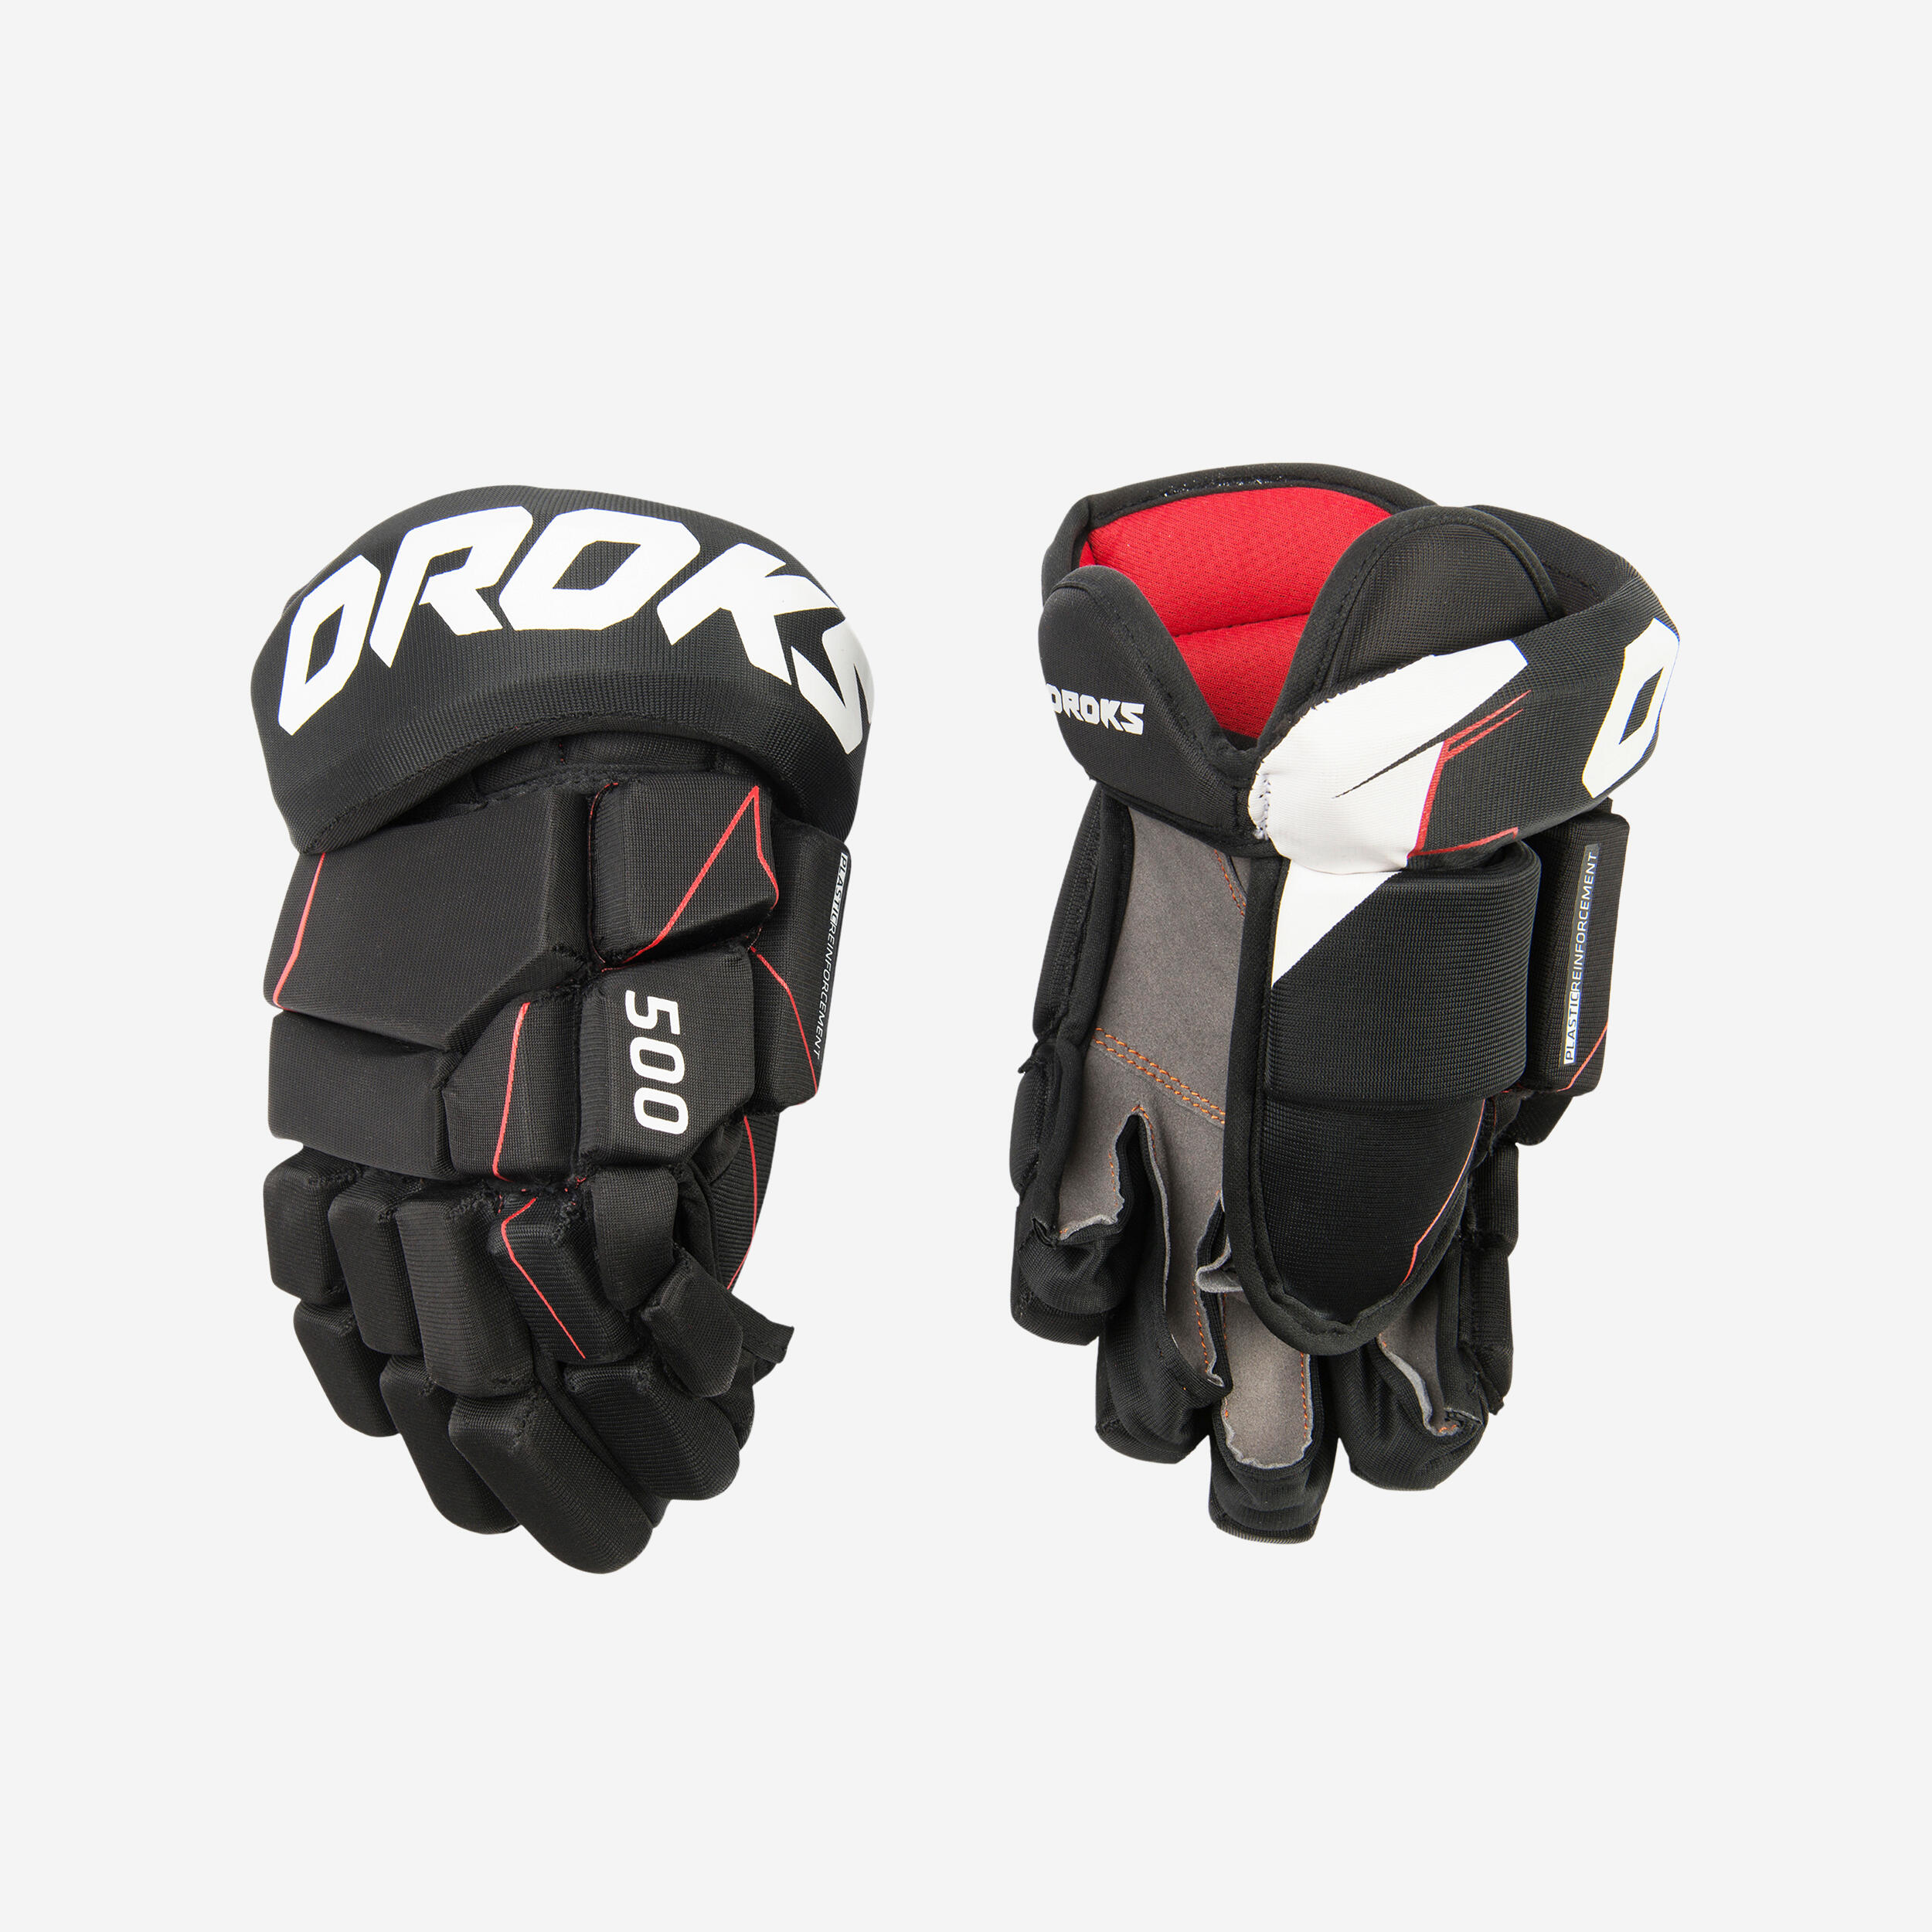 OROKS IH 500 JR Hockey Gloves